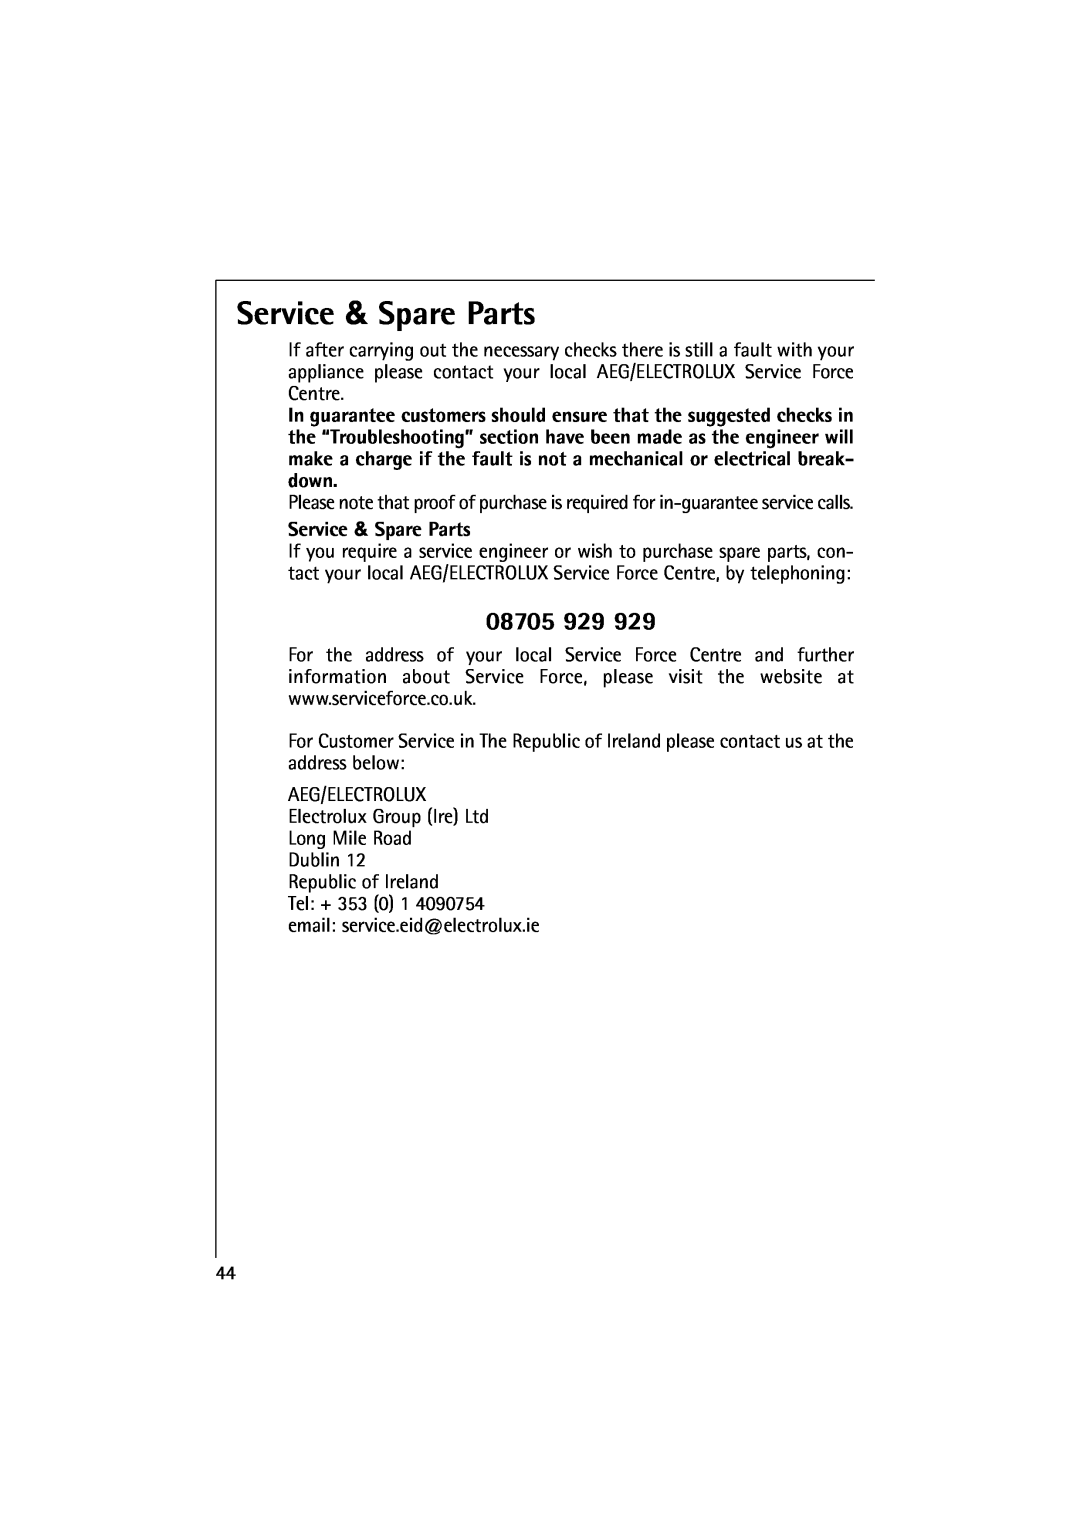 Electrolux 16830 manual Service & Spare Parts, 08705 929 